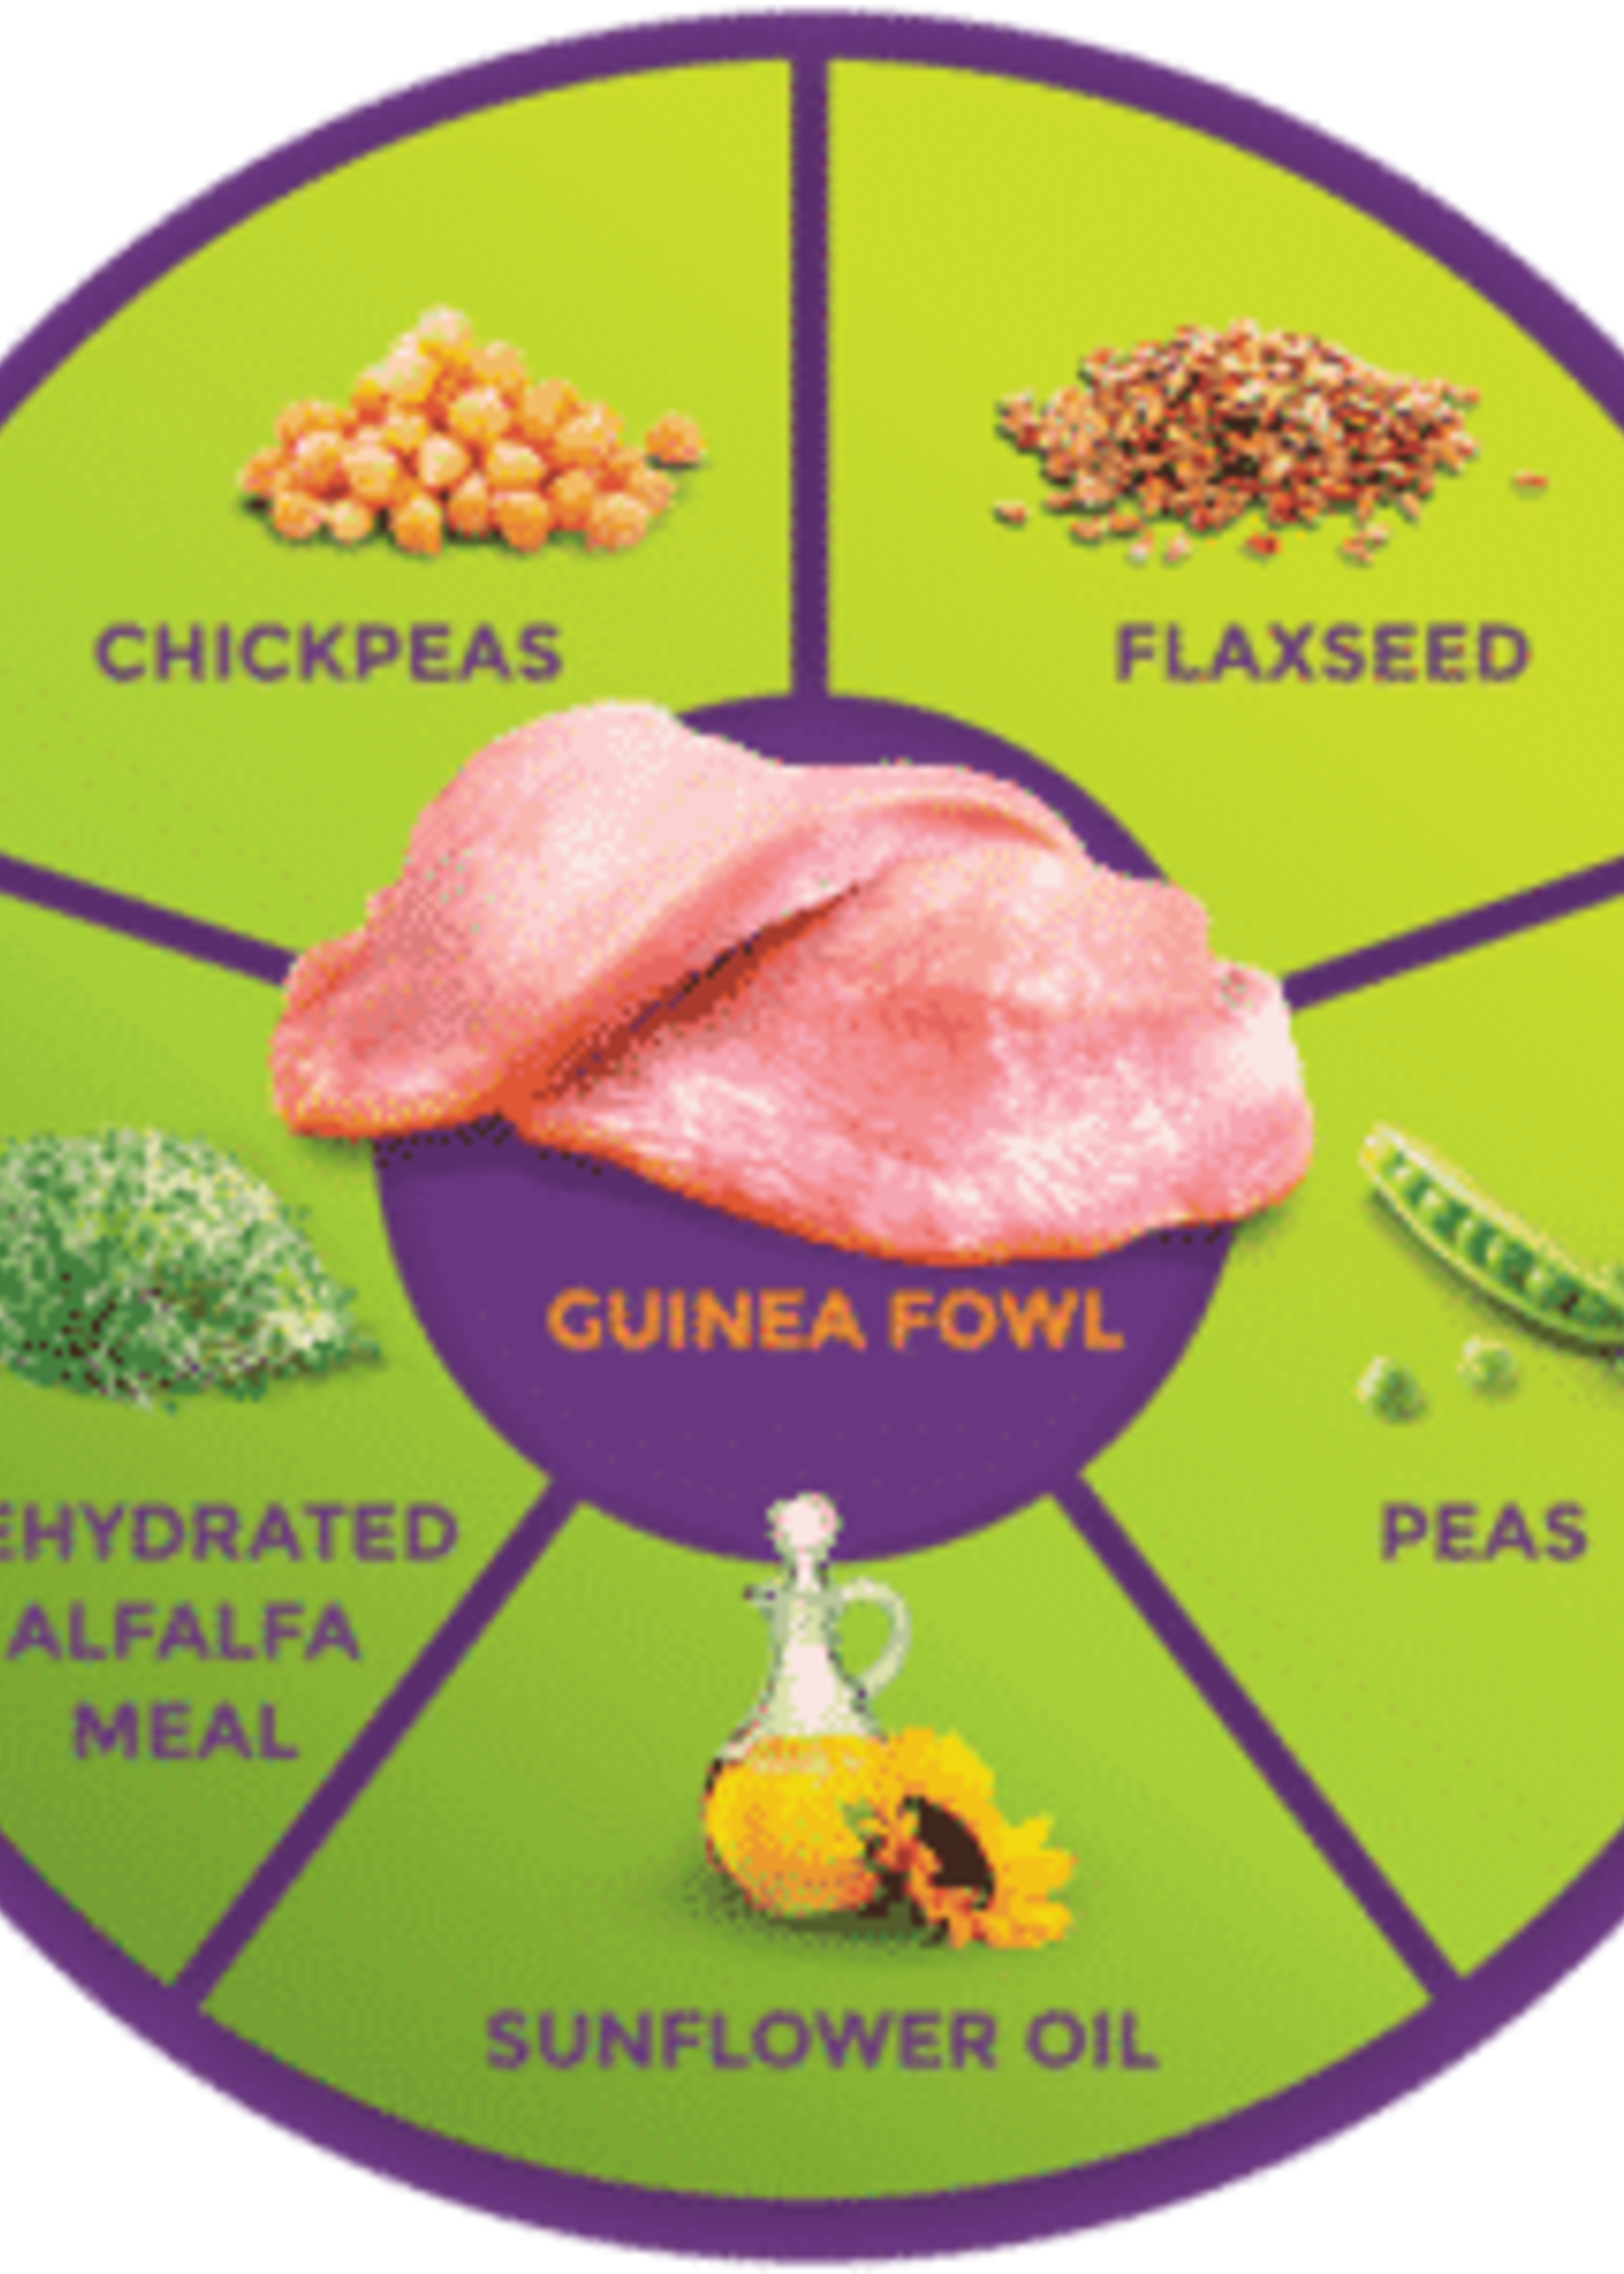 Zignature Zignature Limited Ingredient Guinea Fowl Formula Dry Dog Food